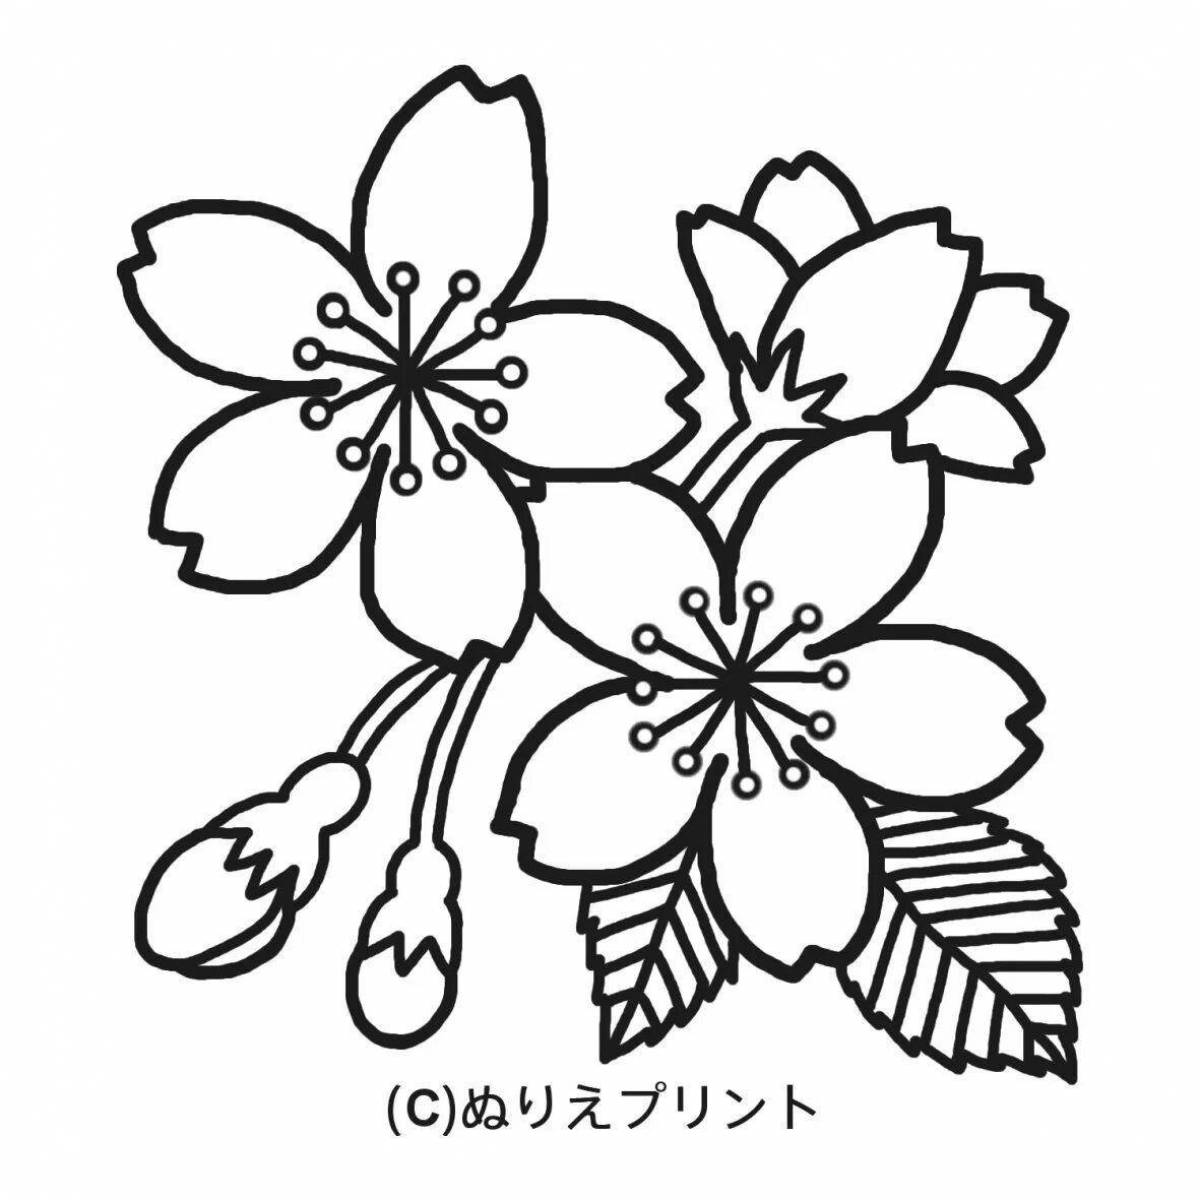 Coloring book inviting sakura branch